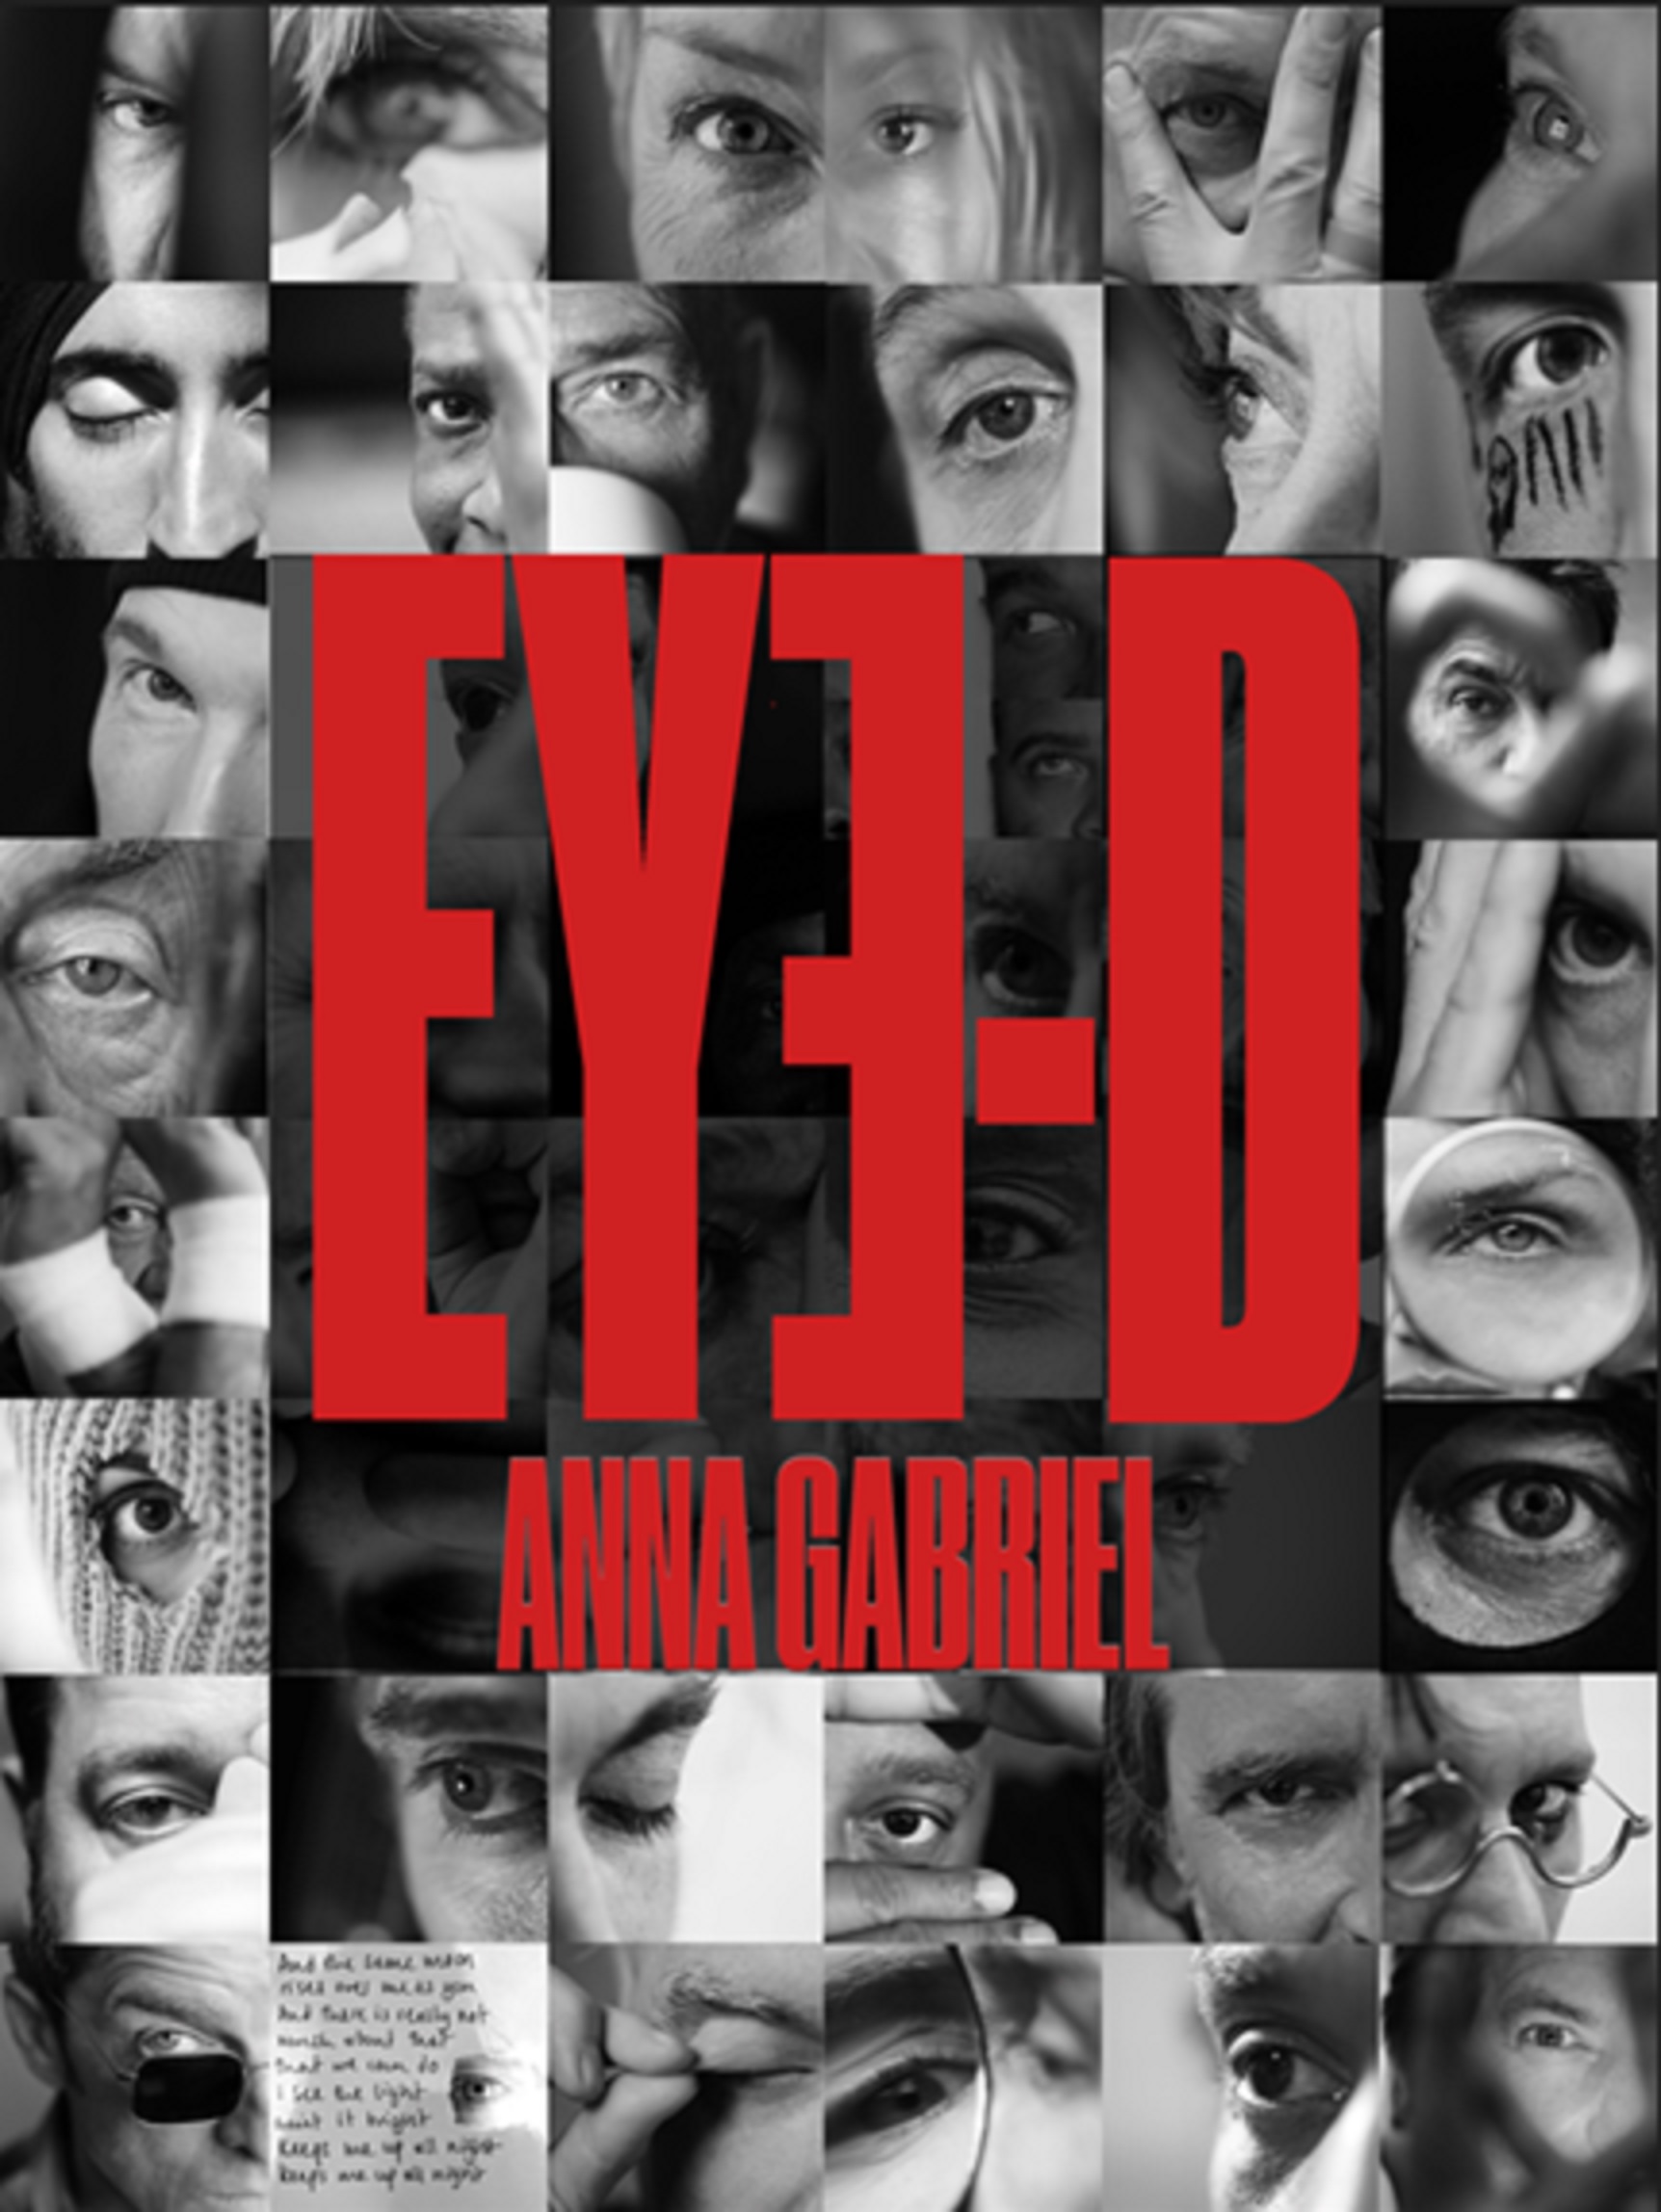 Anna Gabriel To Release EYE-D Photo Book This Fall